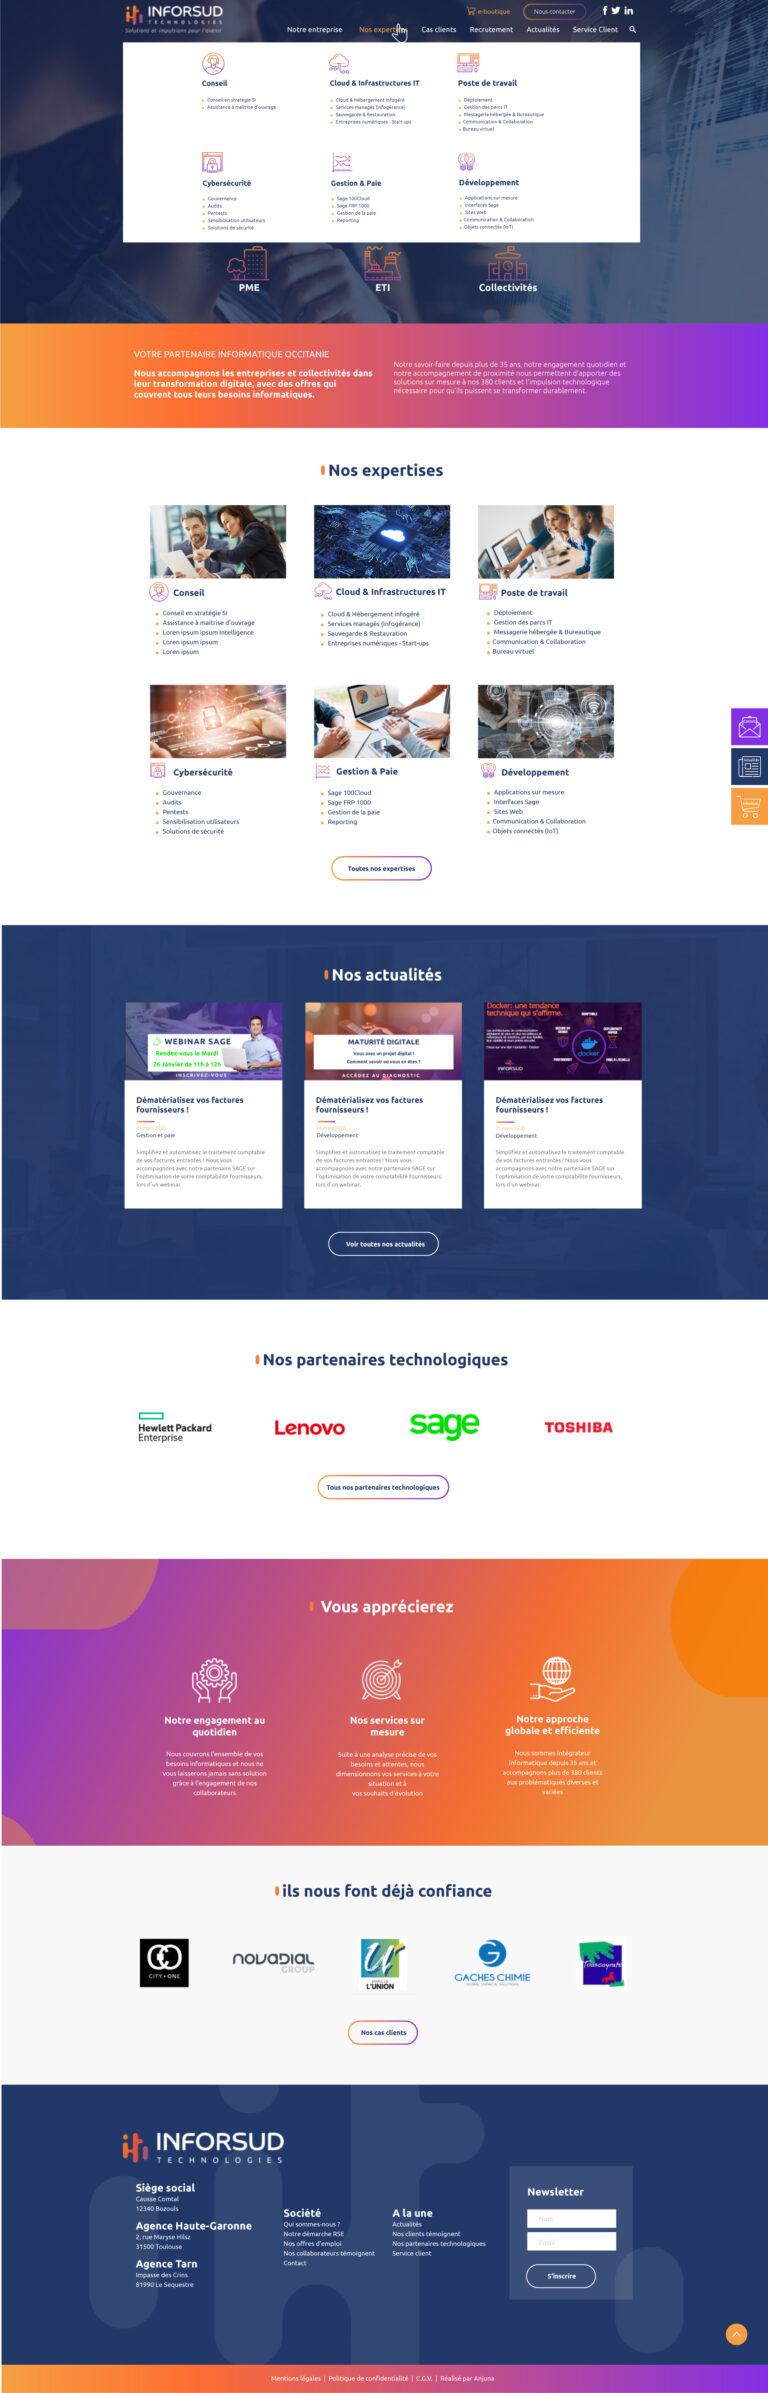 Homepage - inforsud technologies